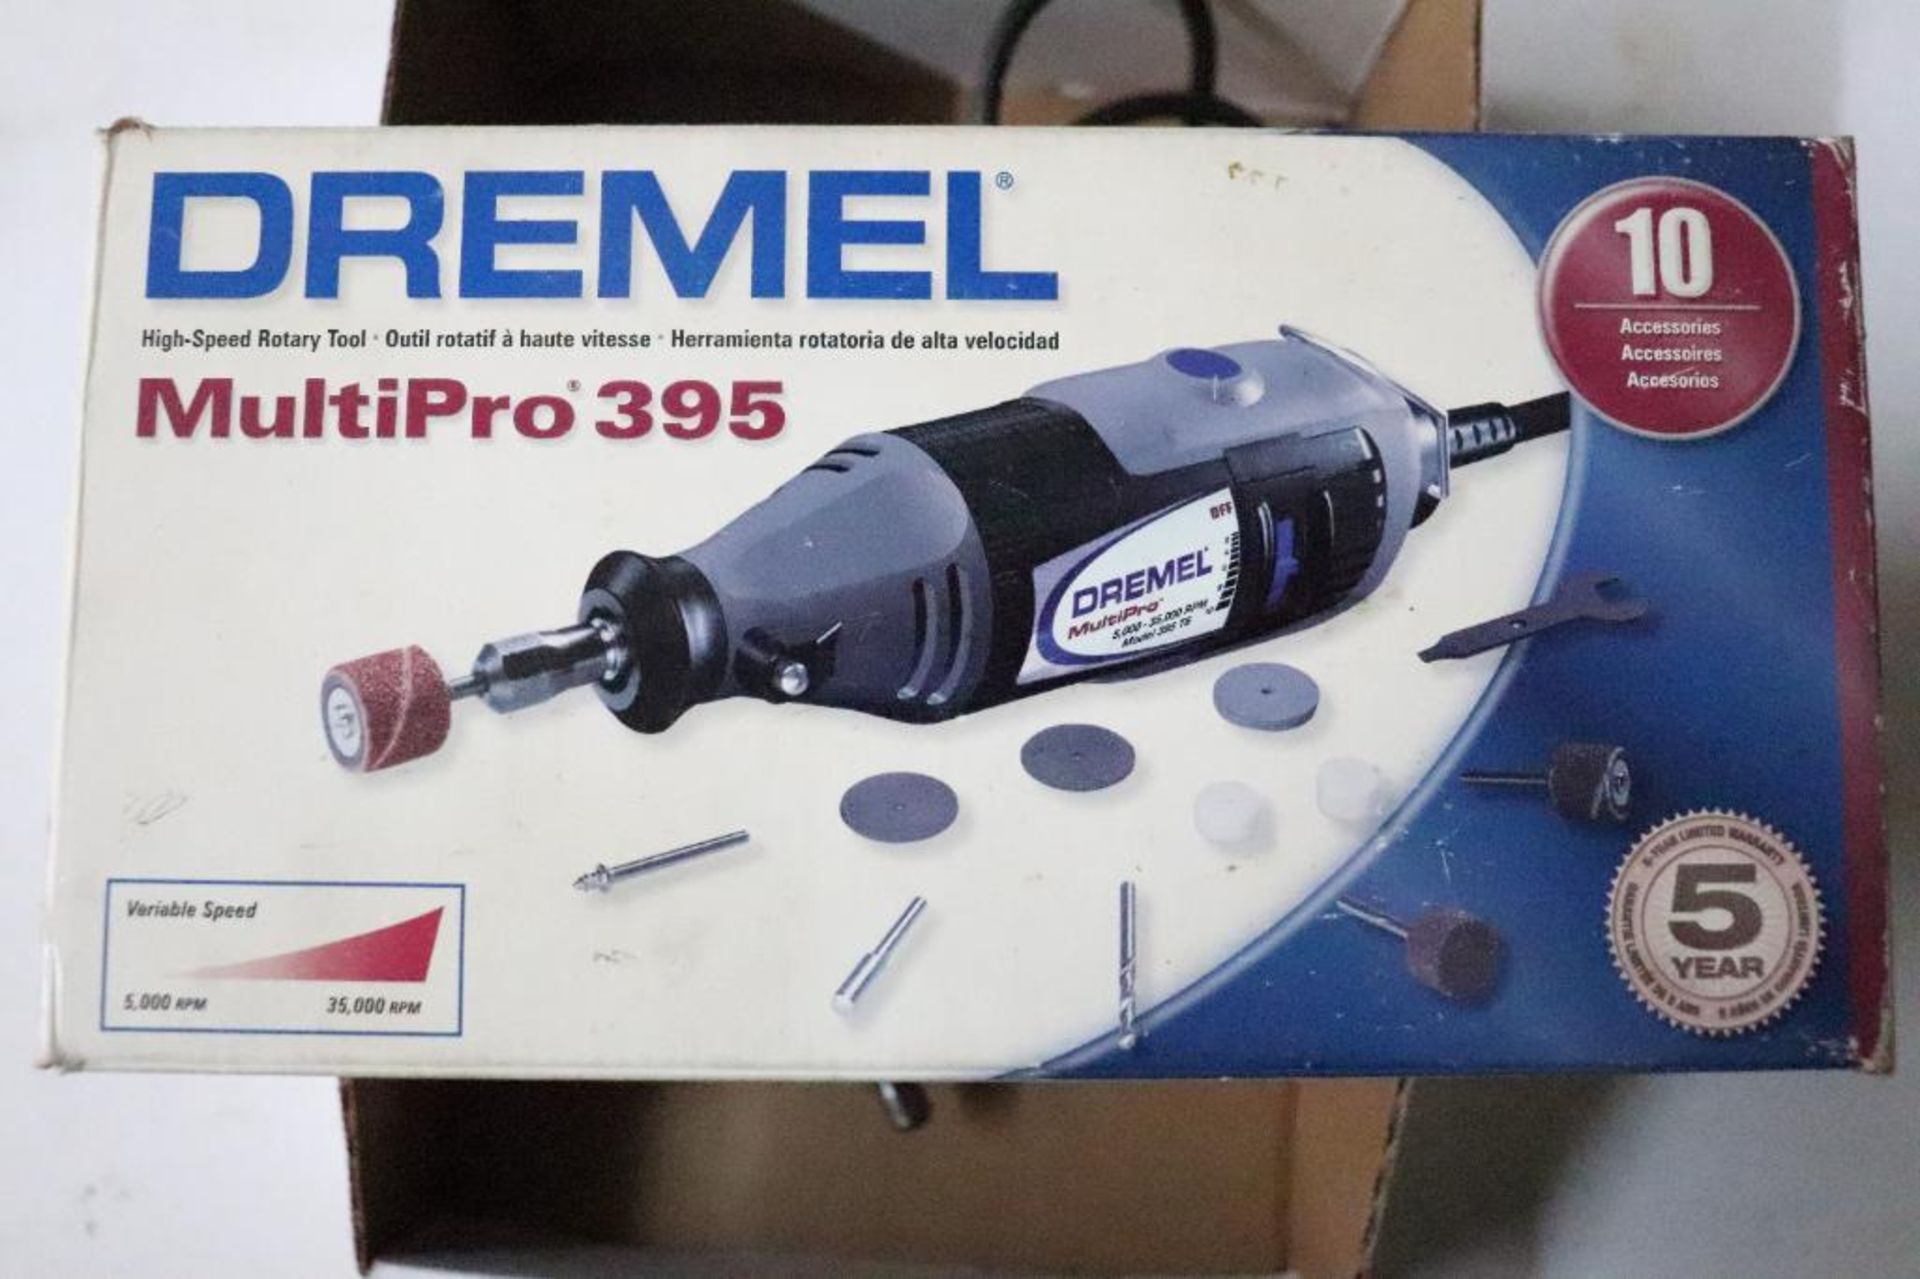 Dremel MultiPro 395 rotary tool - Image 3 of 5